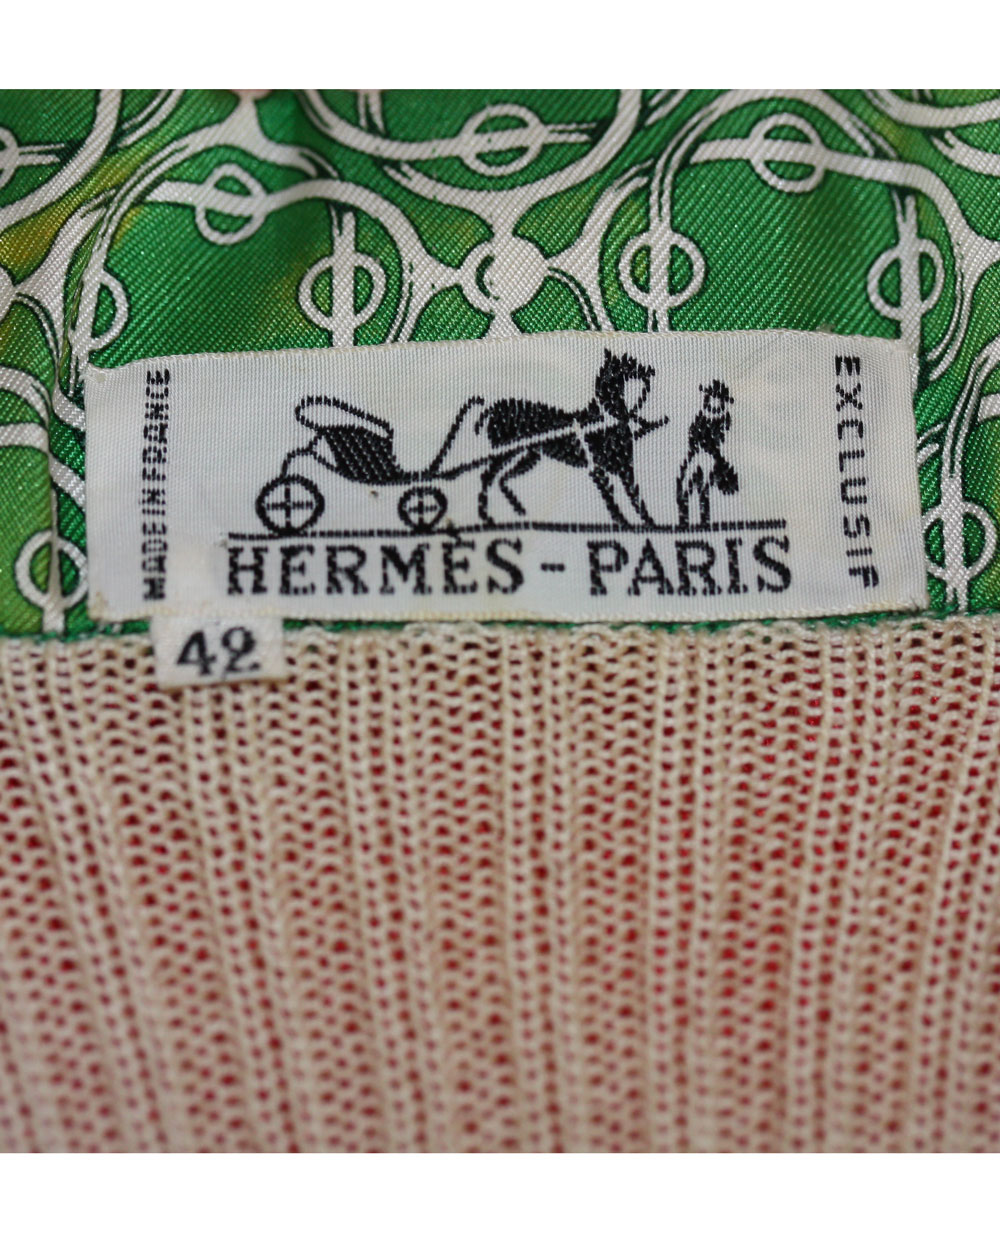 HERMES PARIS Wool and silk blouse '60s